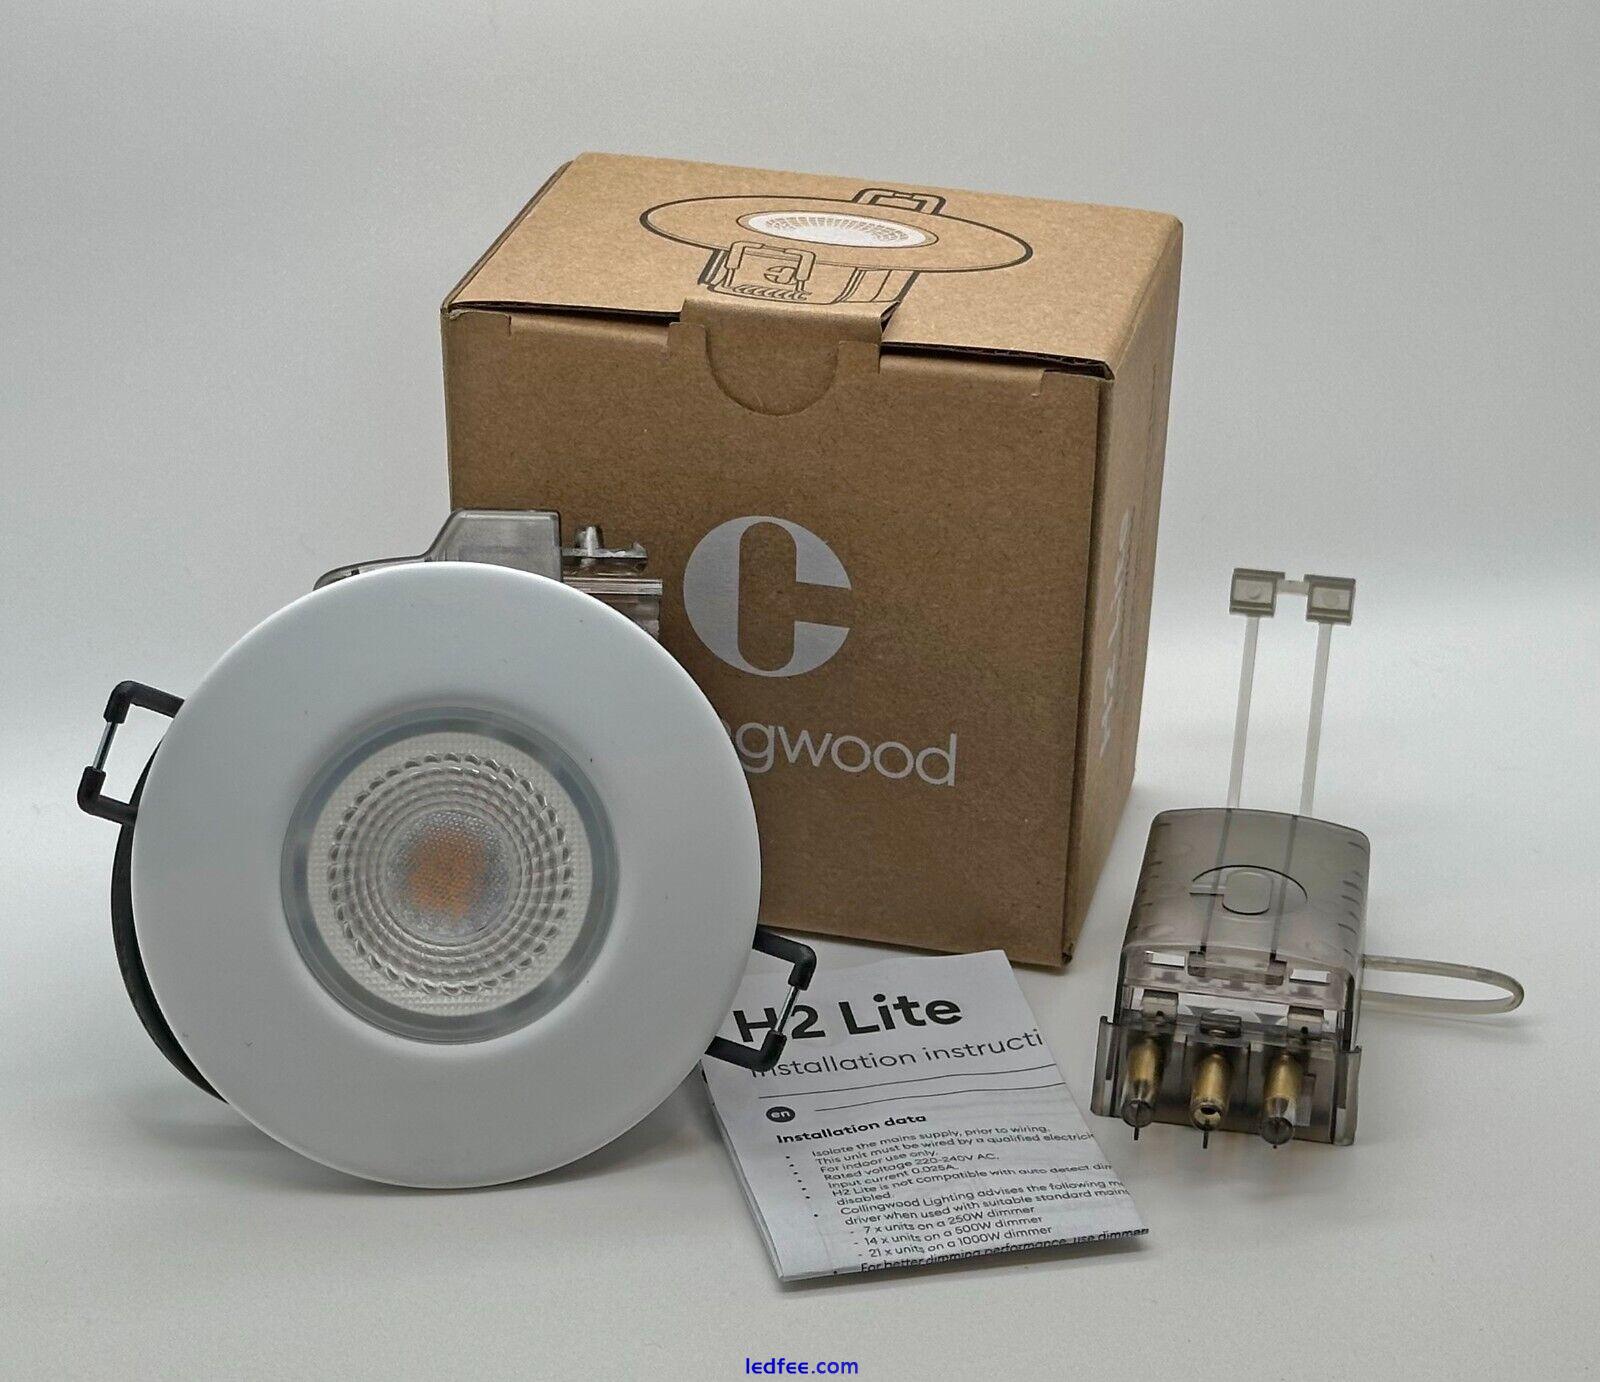 15 X Collingwood H2 Lite Matt White 4.4W LED Downlight DLT388MW5530 3000K Dim 0 